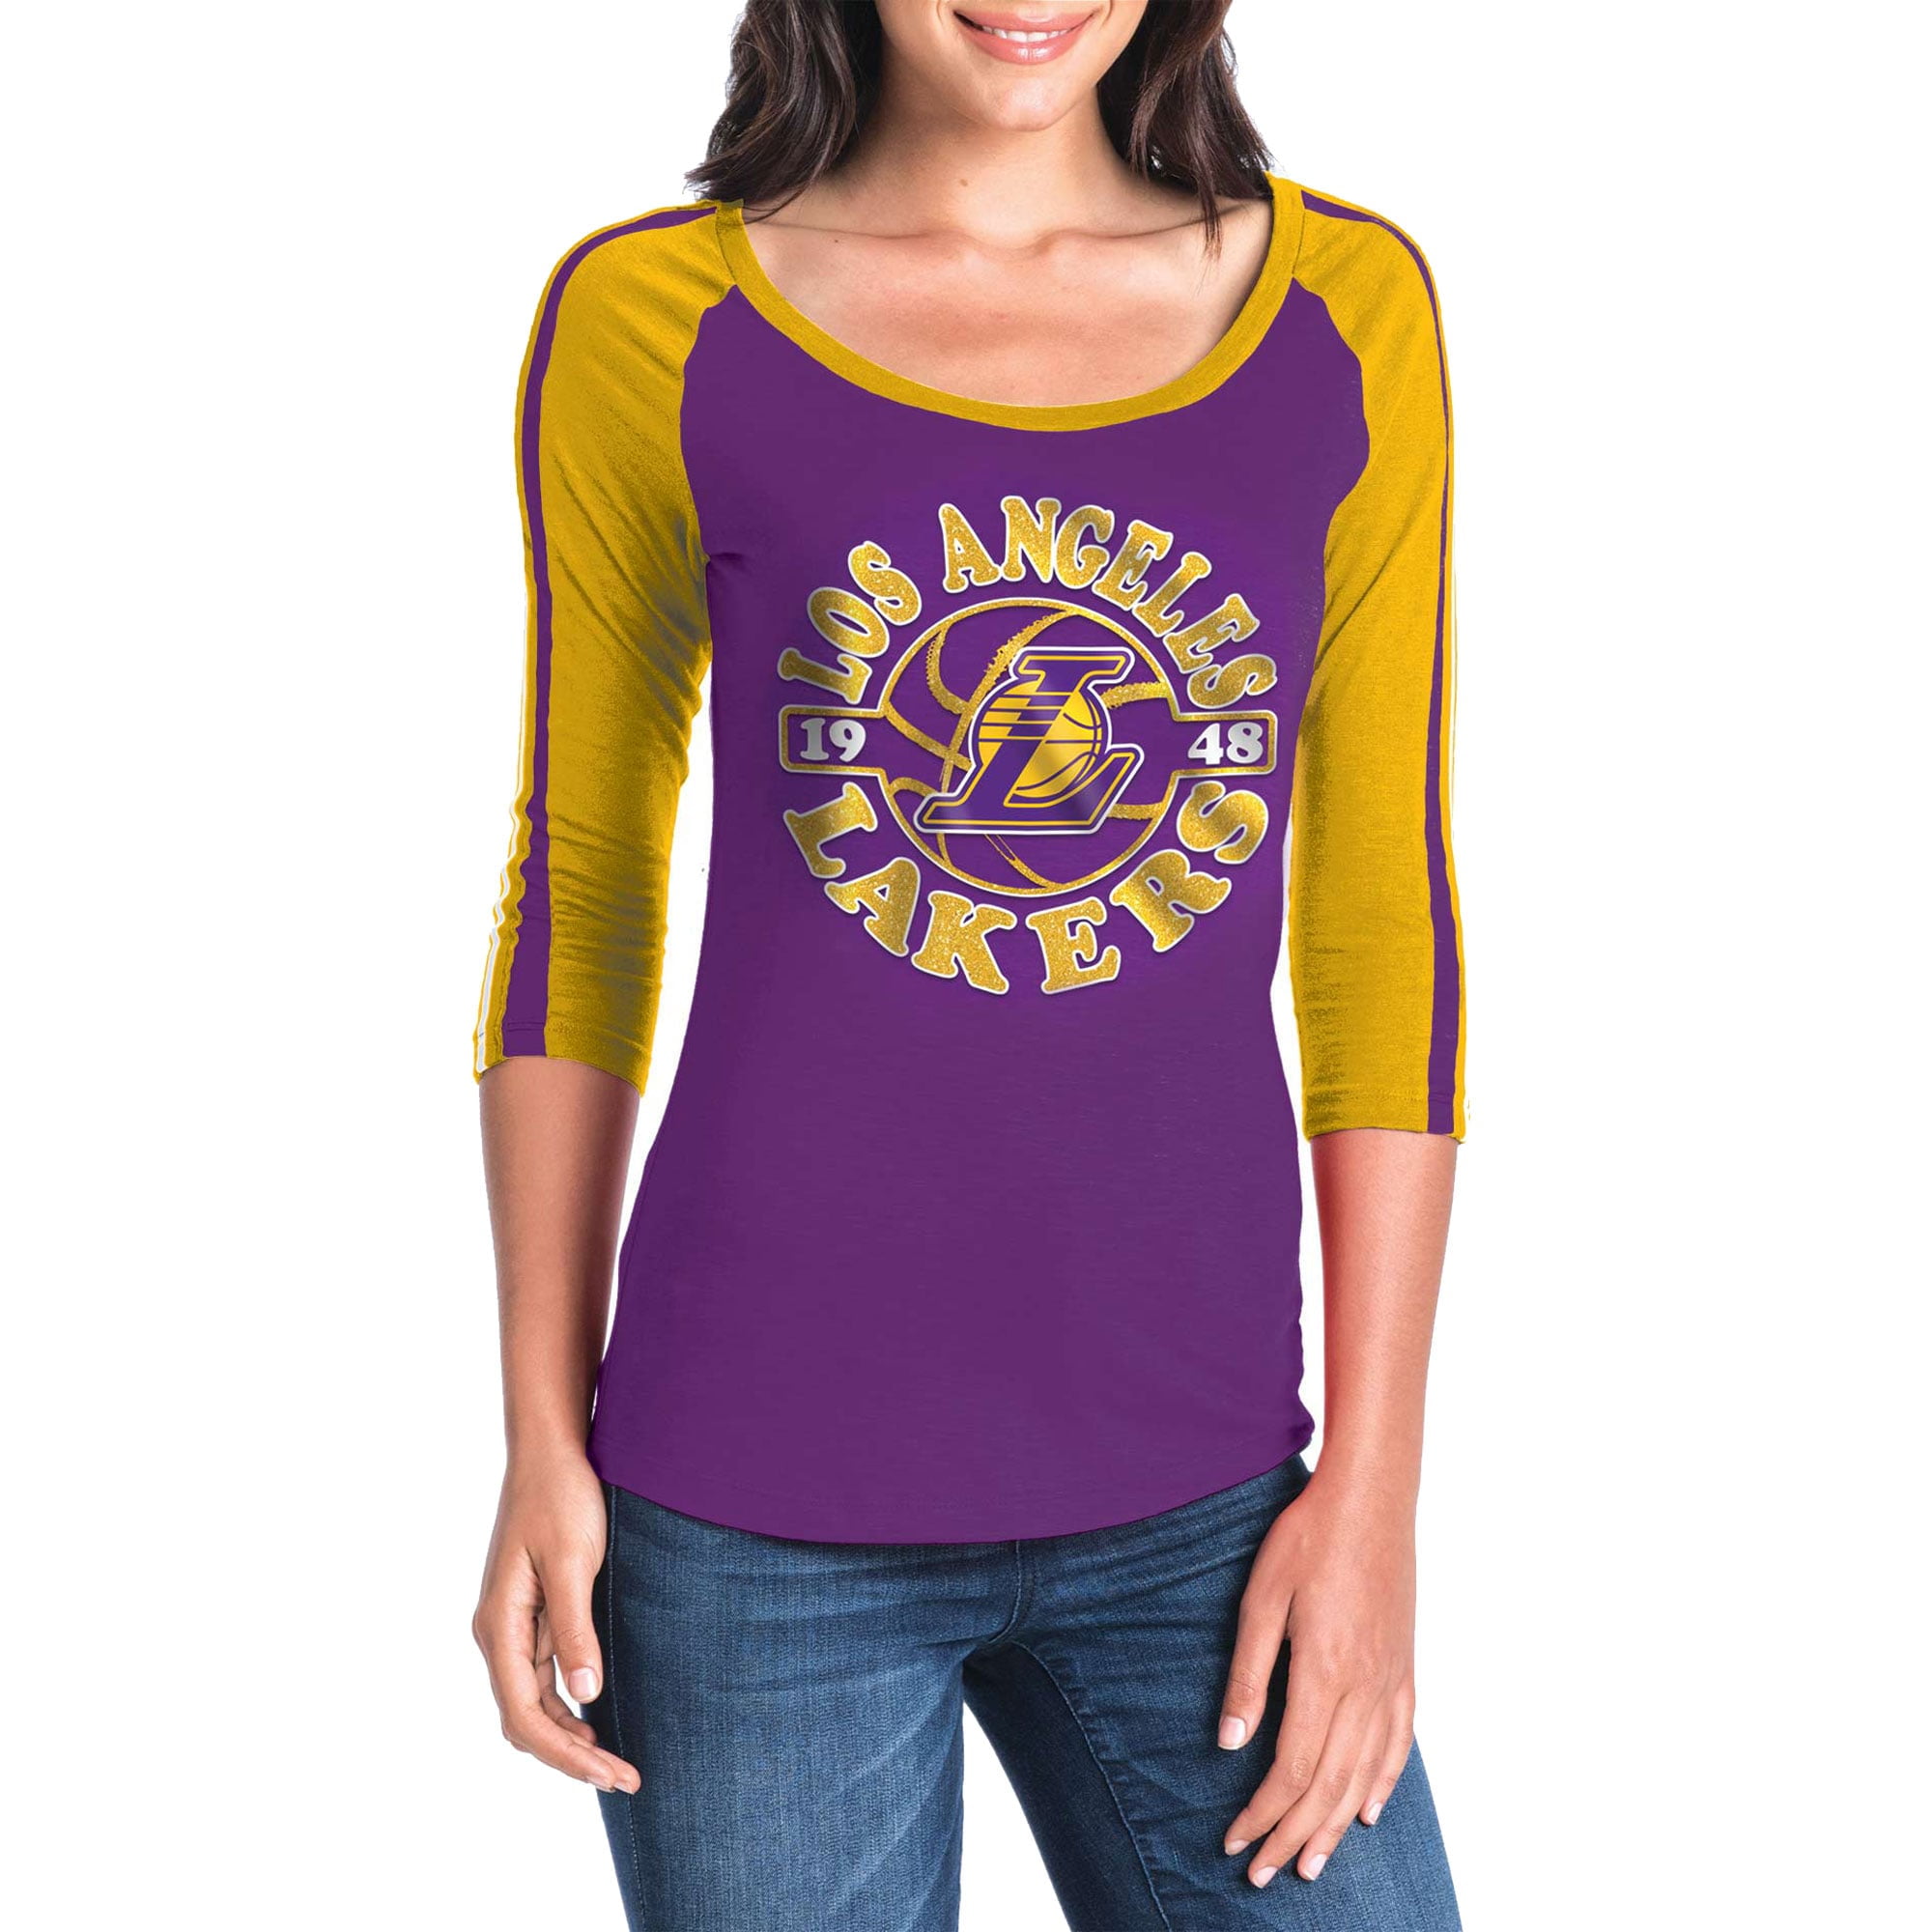 womens purple lakers jersey